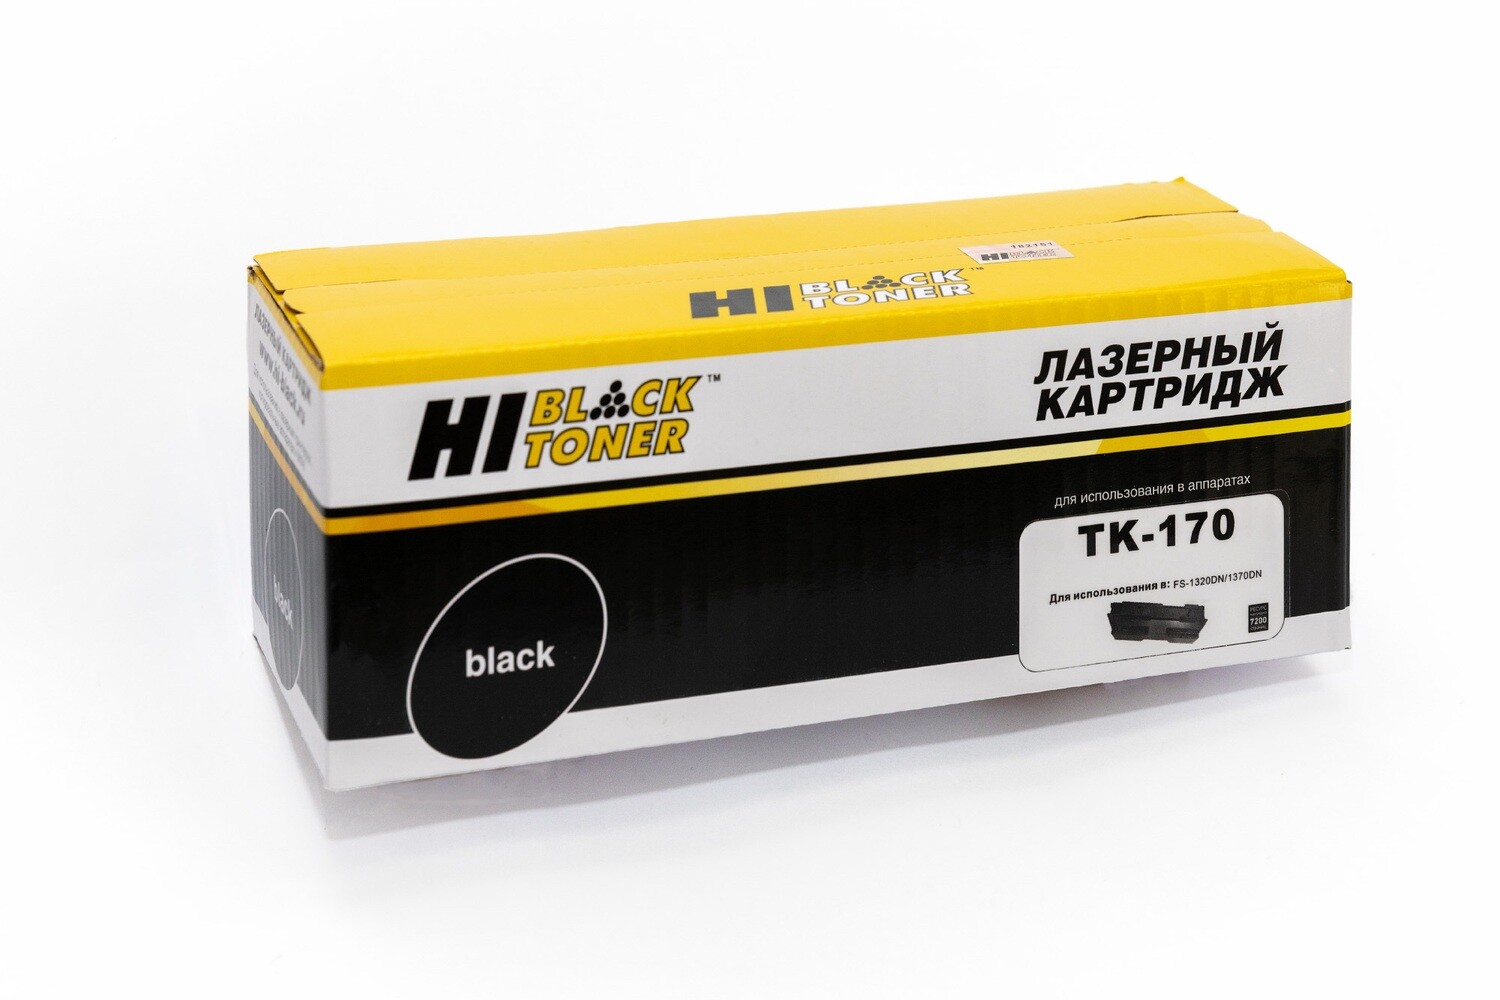 Картридж Hi-Black (HB-TK-170) для Kyocera FS-1320D/ 1370DN/ ECOSYS P2135D, 7,2K